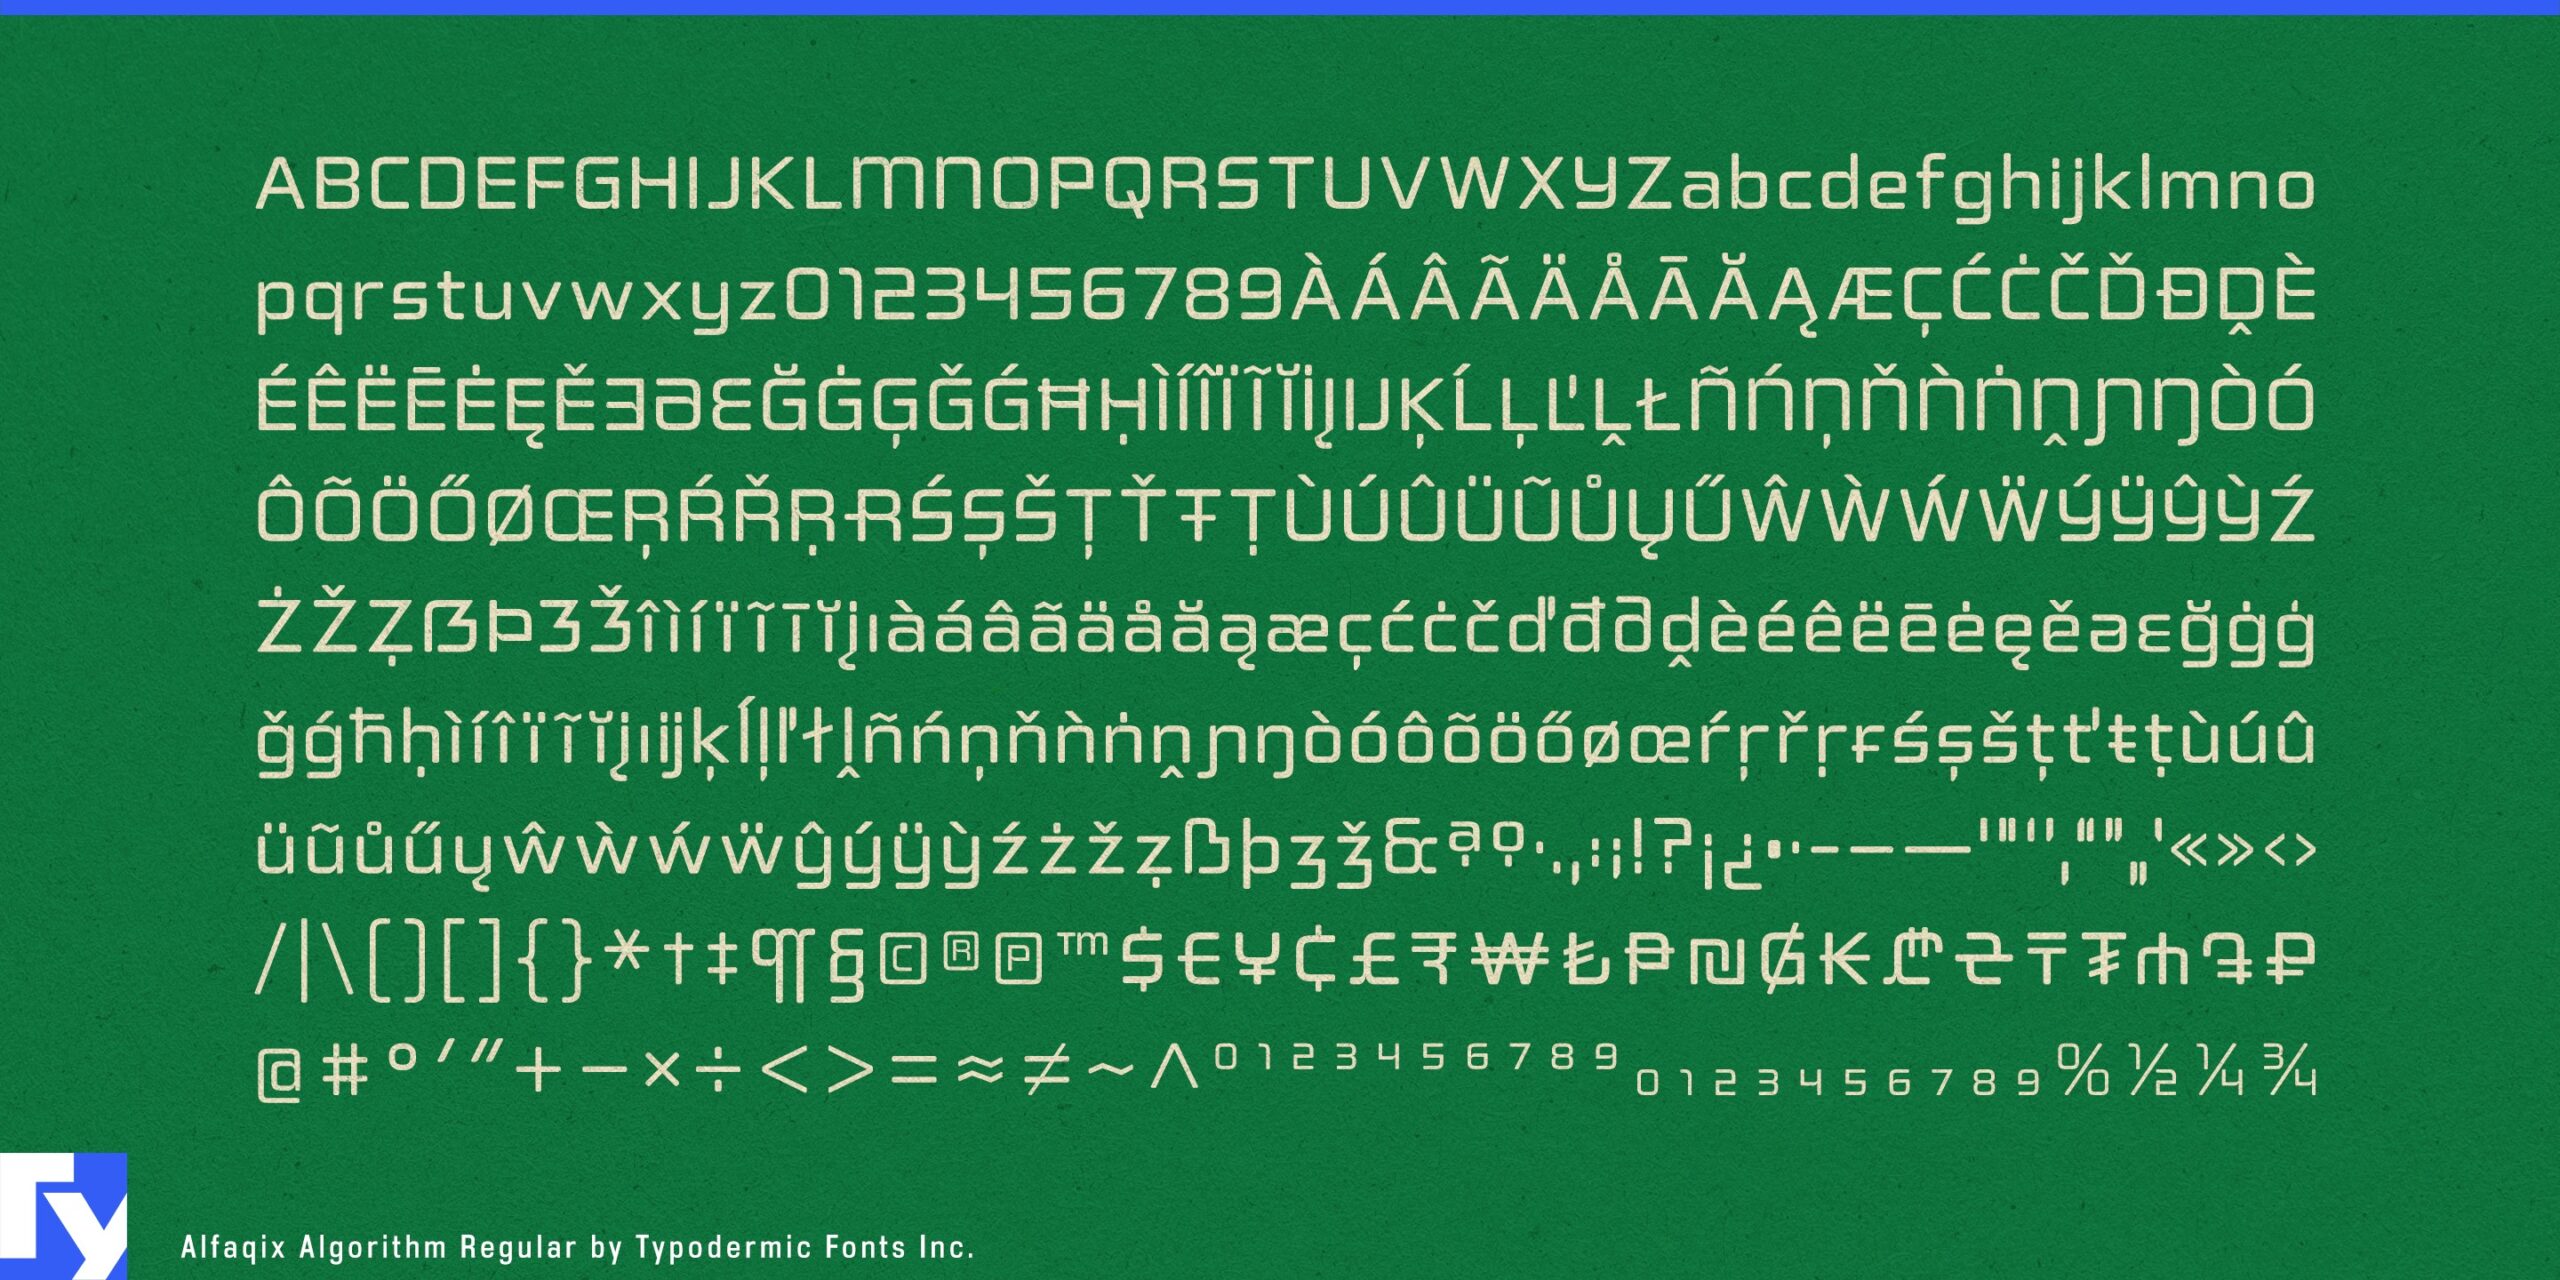 Futuristic Alfaqix Algorithm typeface with precision and avant-garde style